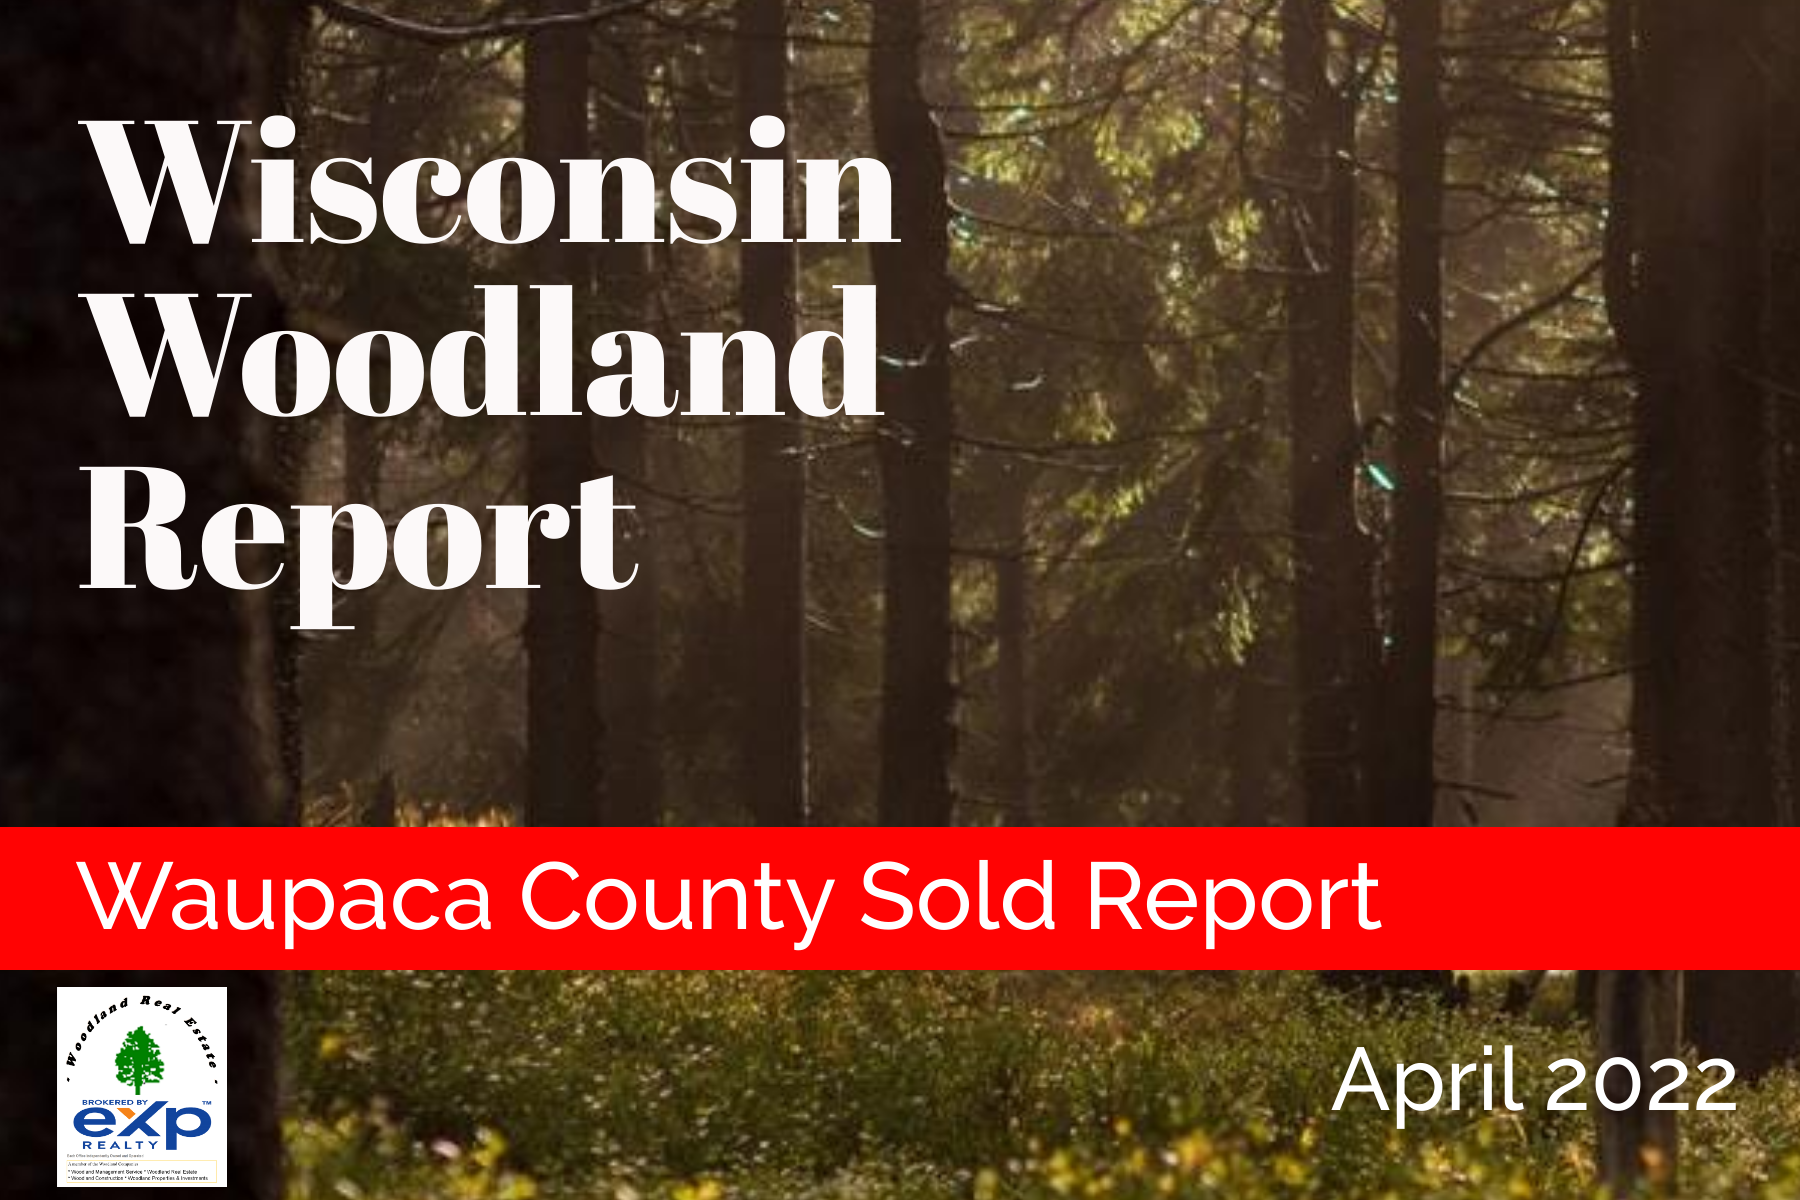 Waupaca_SOLD_Woodland-Reports-1800x1200-layout1775-1h4p6da.png